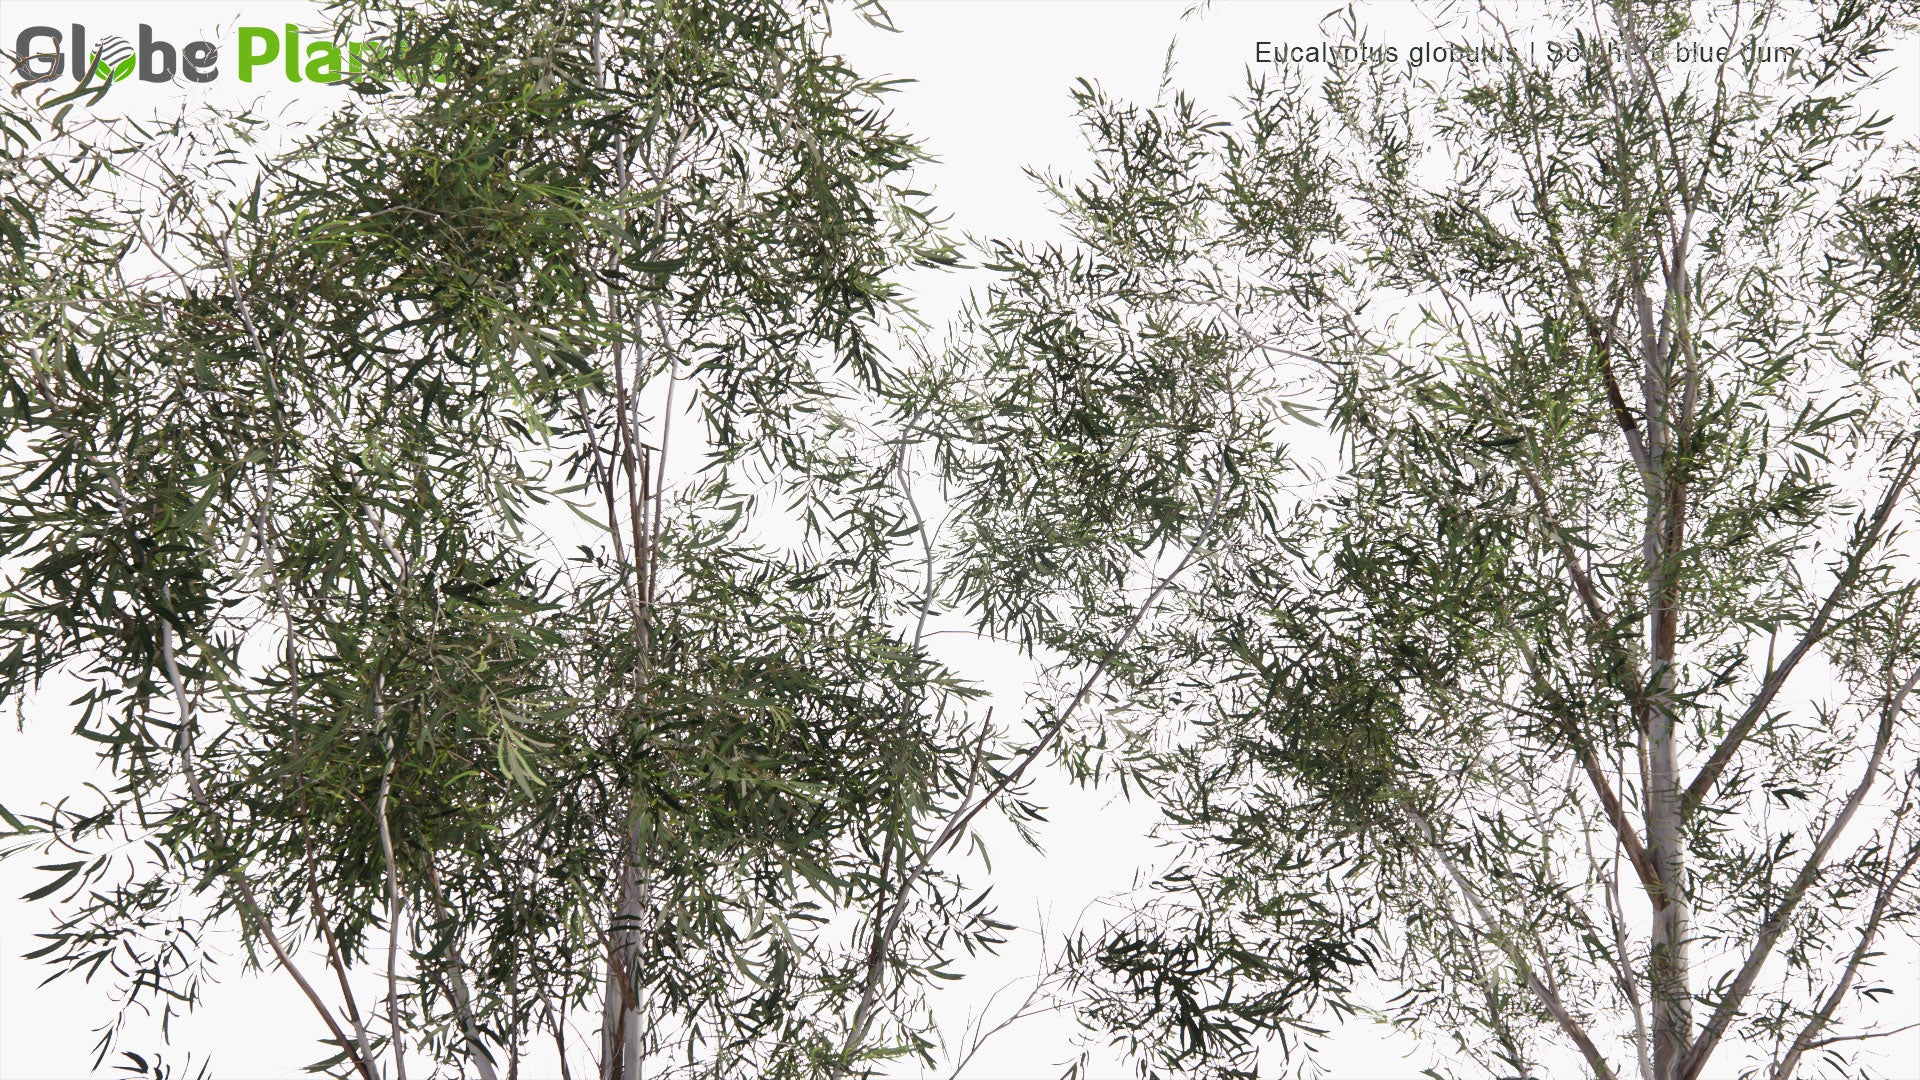 Low Poly Eucalyptus Globulus - Southern Blue Gum (3D Model)